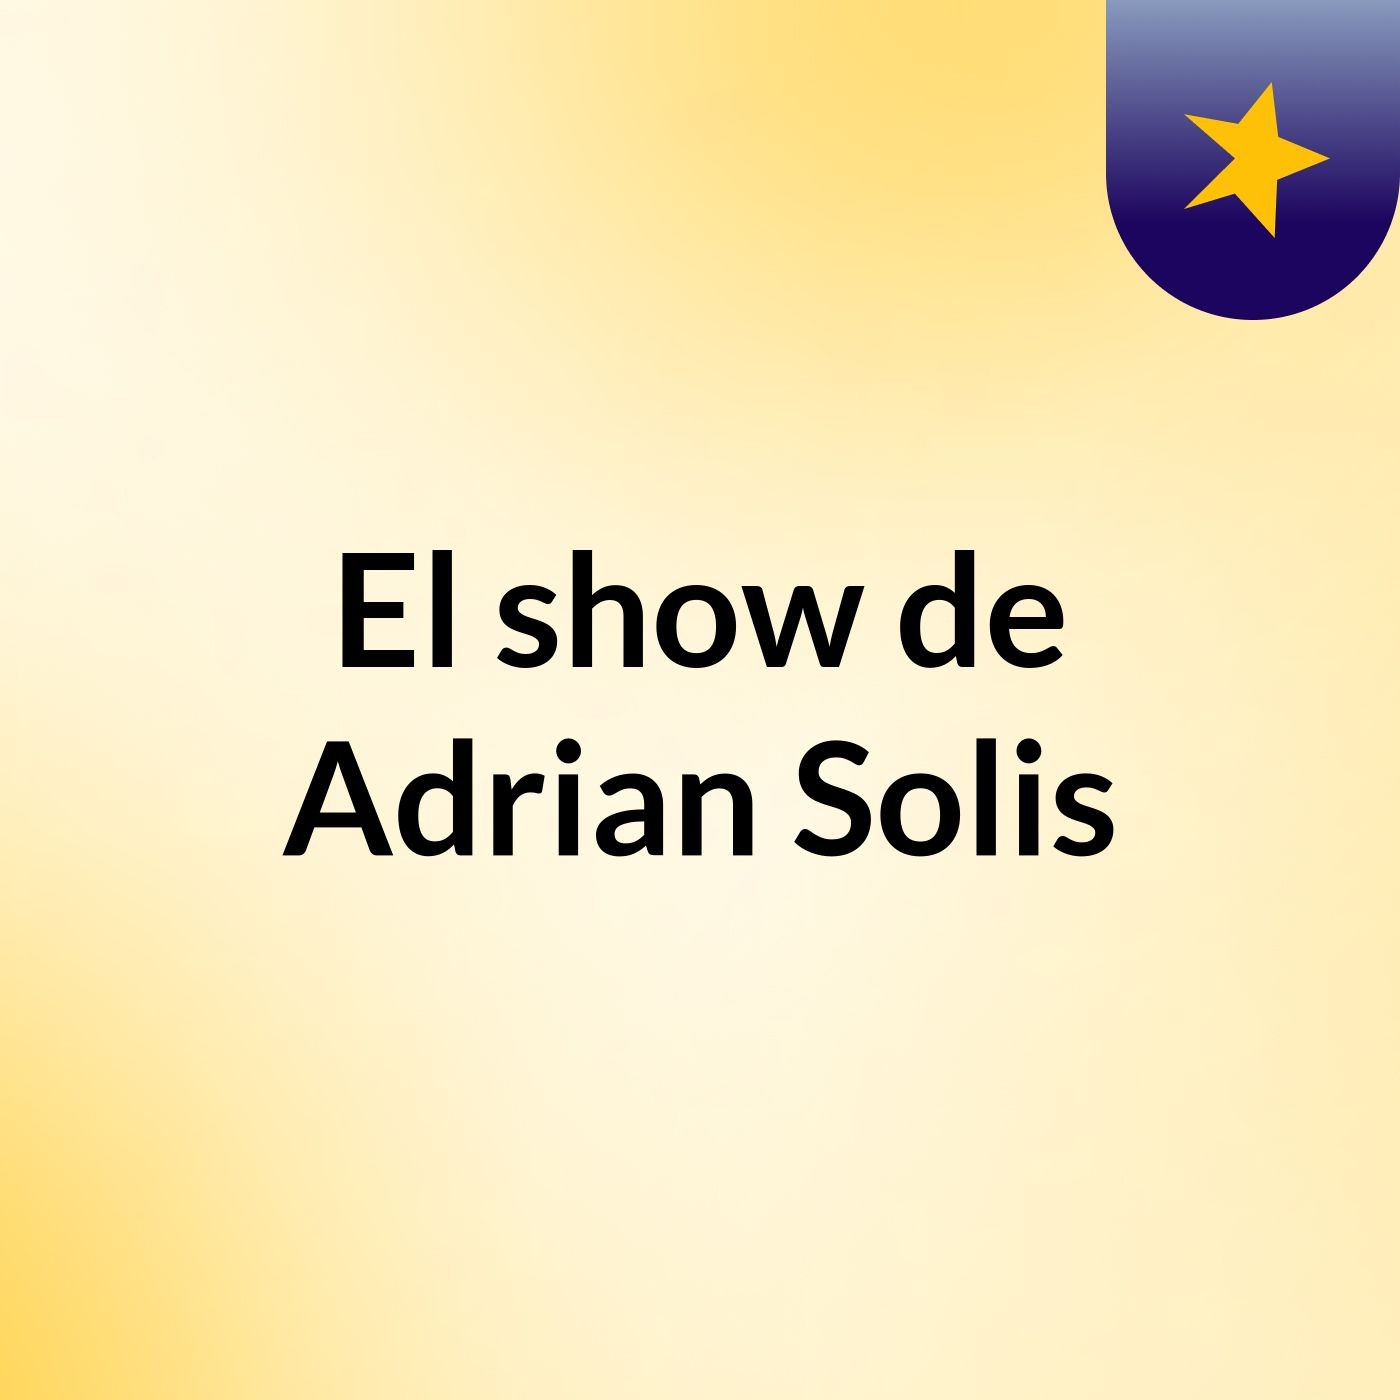 El show de Adrian Solis